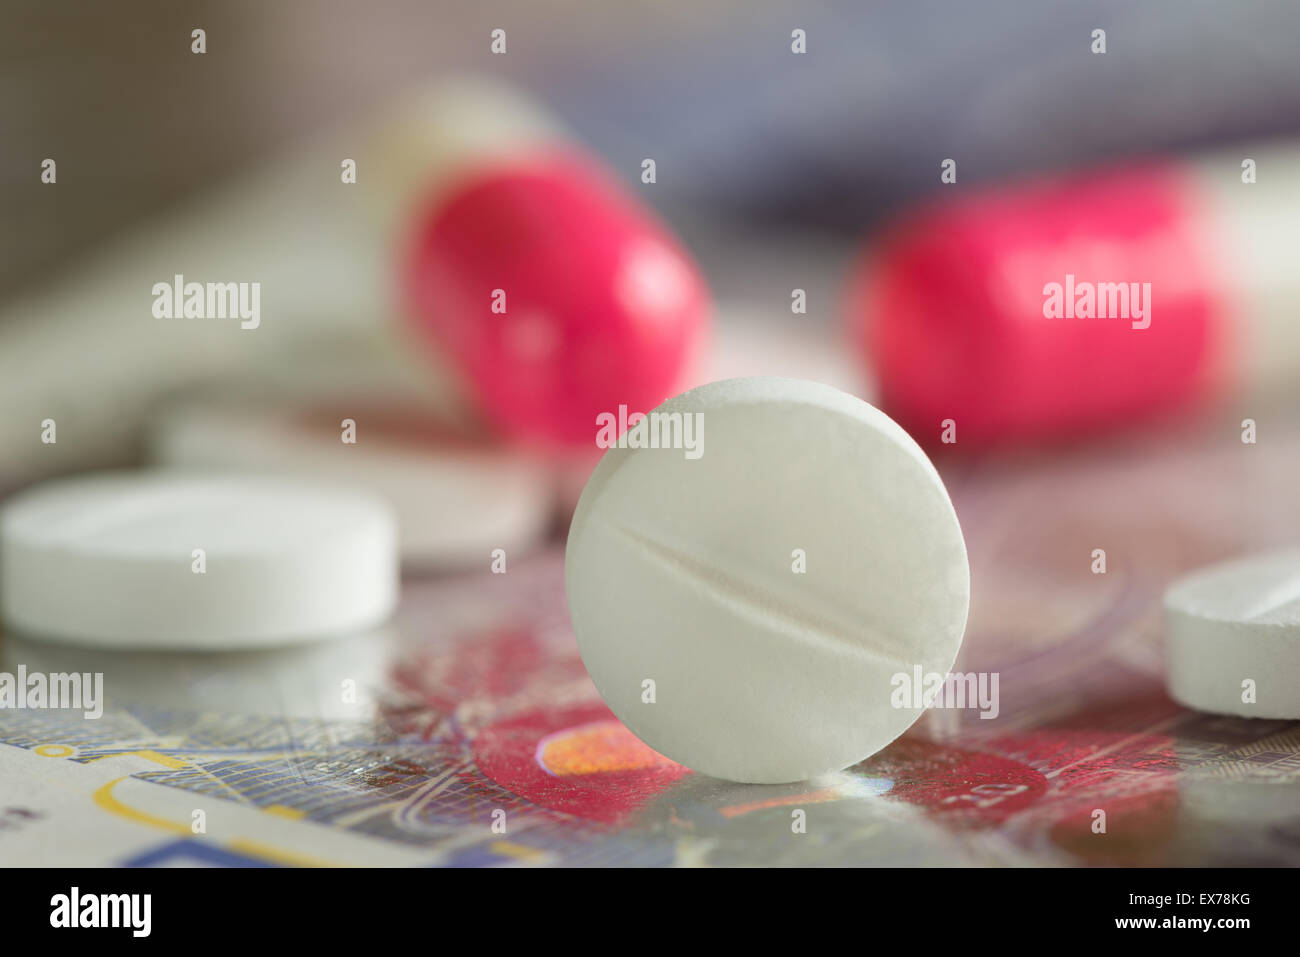 Mezcla De Píldoras Aspirina Ibuprofeno Analgésicos Sin Receta Sin Receta Antidepresivos